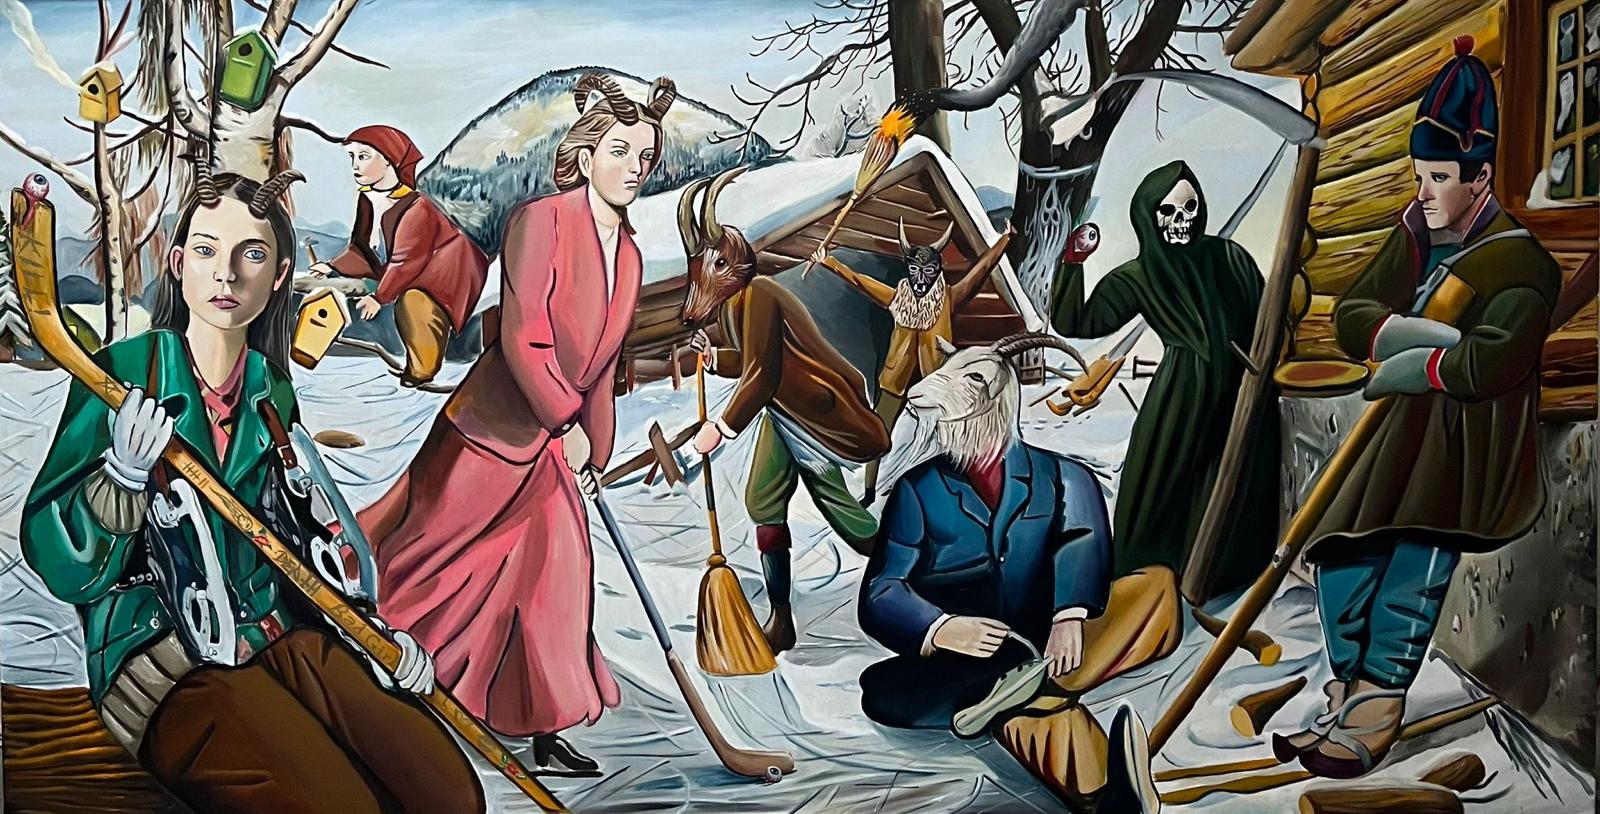 Jan Výtiska, Rohatá zima. Zdroj: Sport in Art